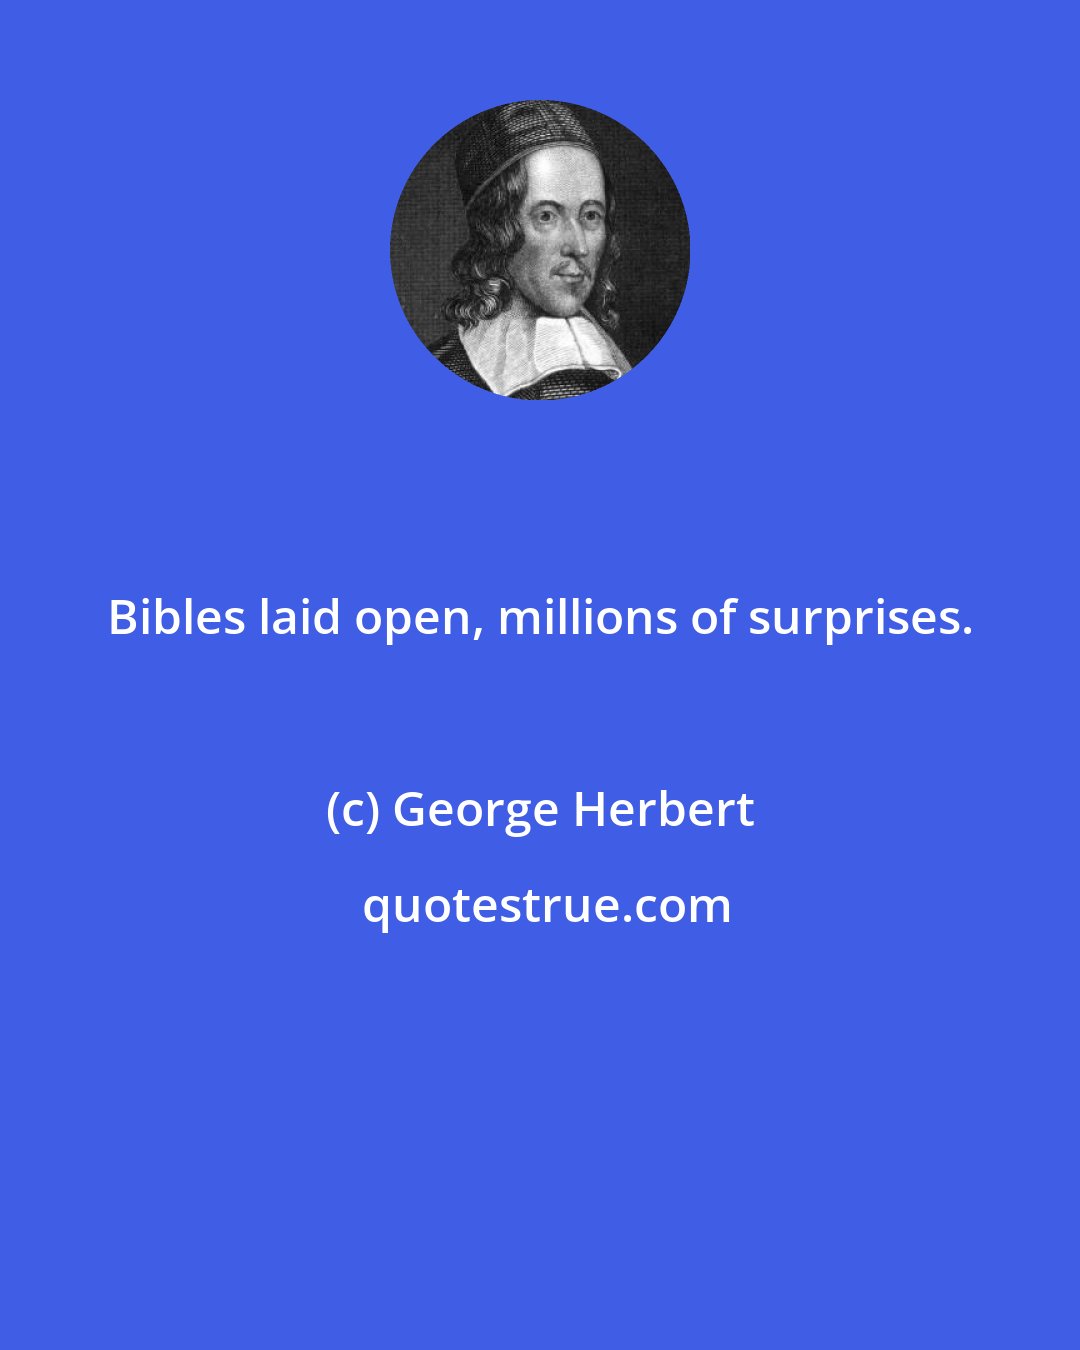 George Herbert: Bibles laid open, millions of surprises.